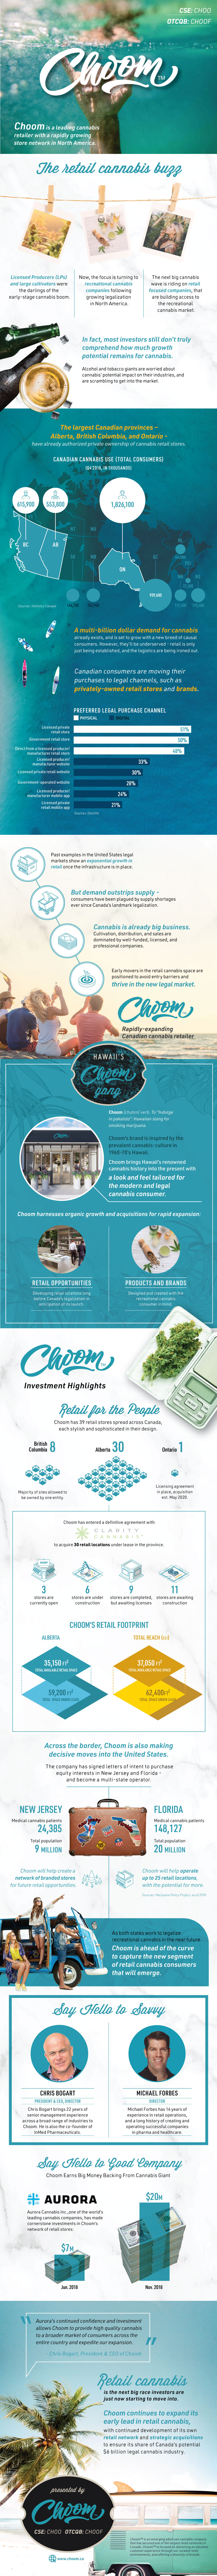 Choom (OTCQB: CHOOF | CSE: CHOOM) Company Spotlight – Infographic